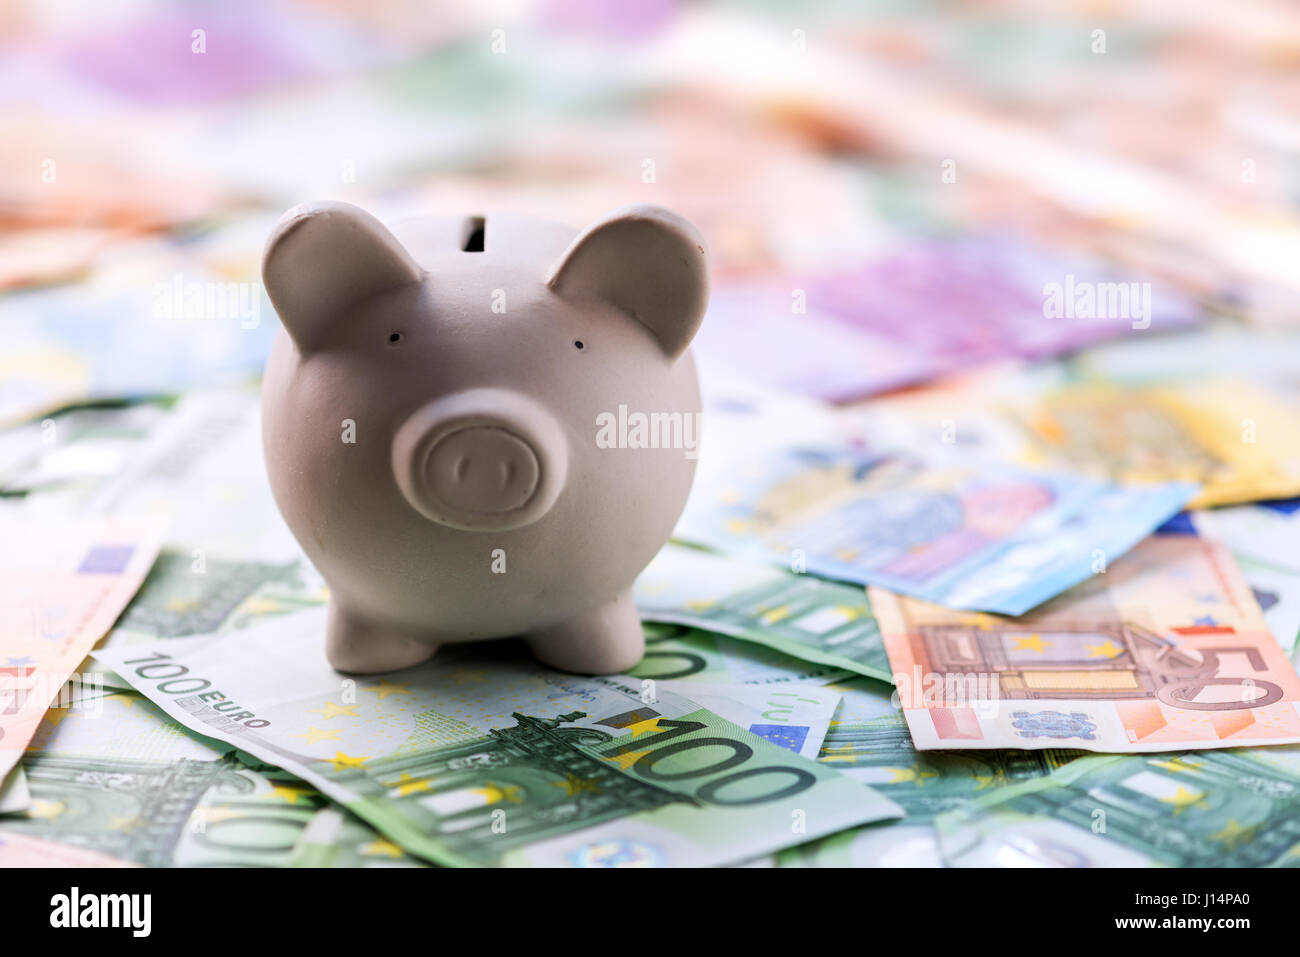 pig money box with cash closeup Stock Photo